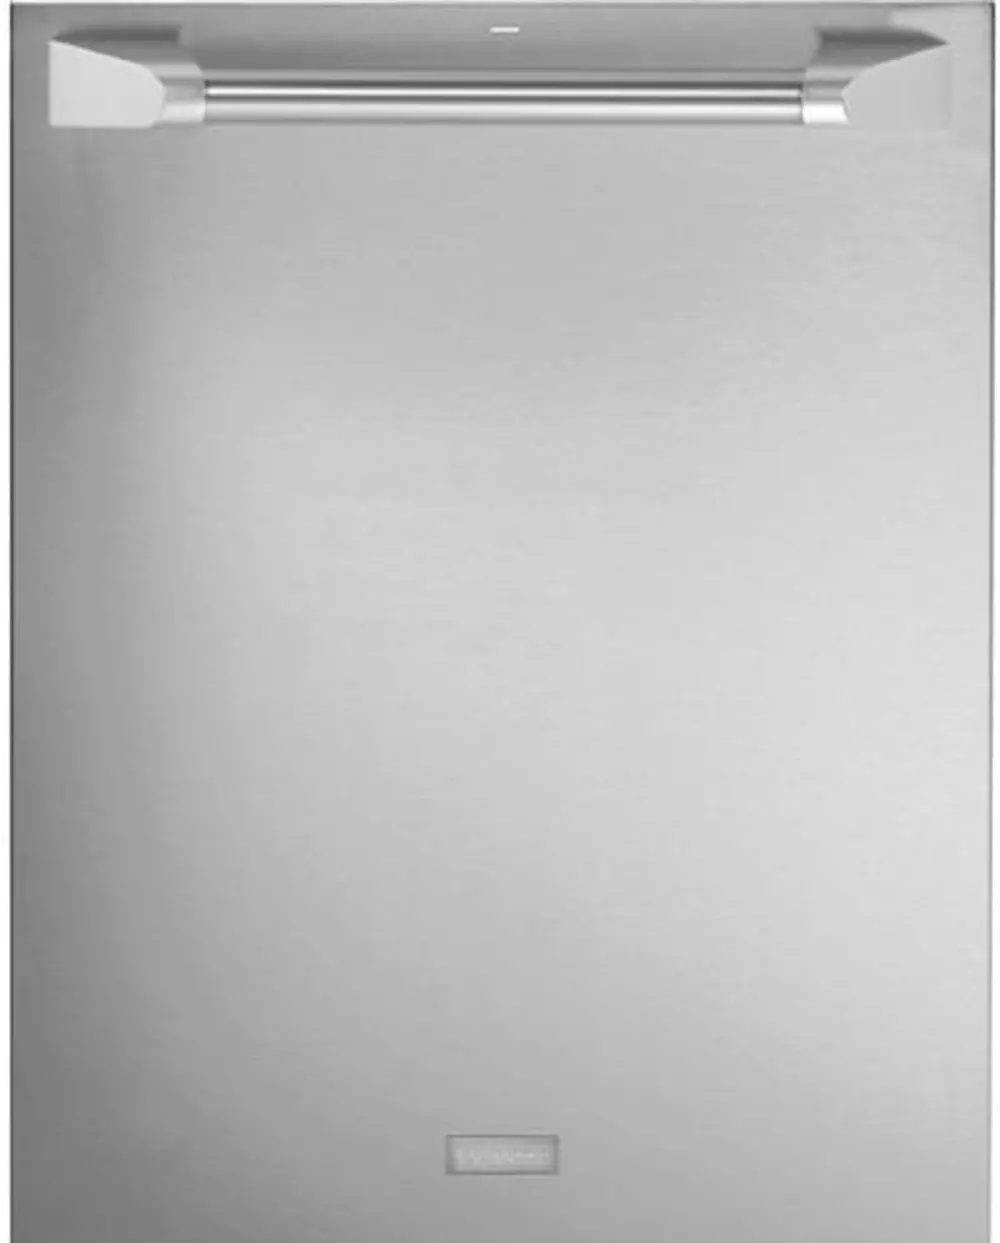 ZDT915SPJSS Monogram Built-in Dishwasher - Stainless Steel-1